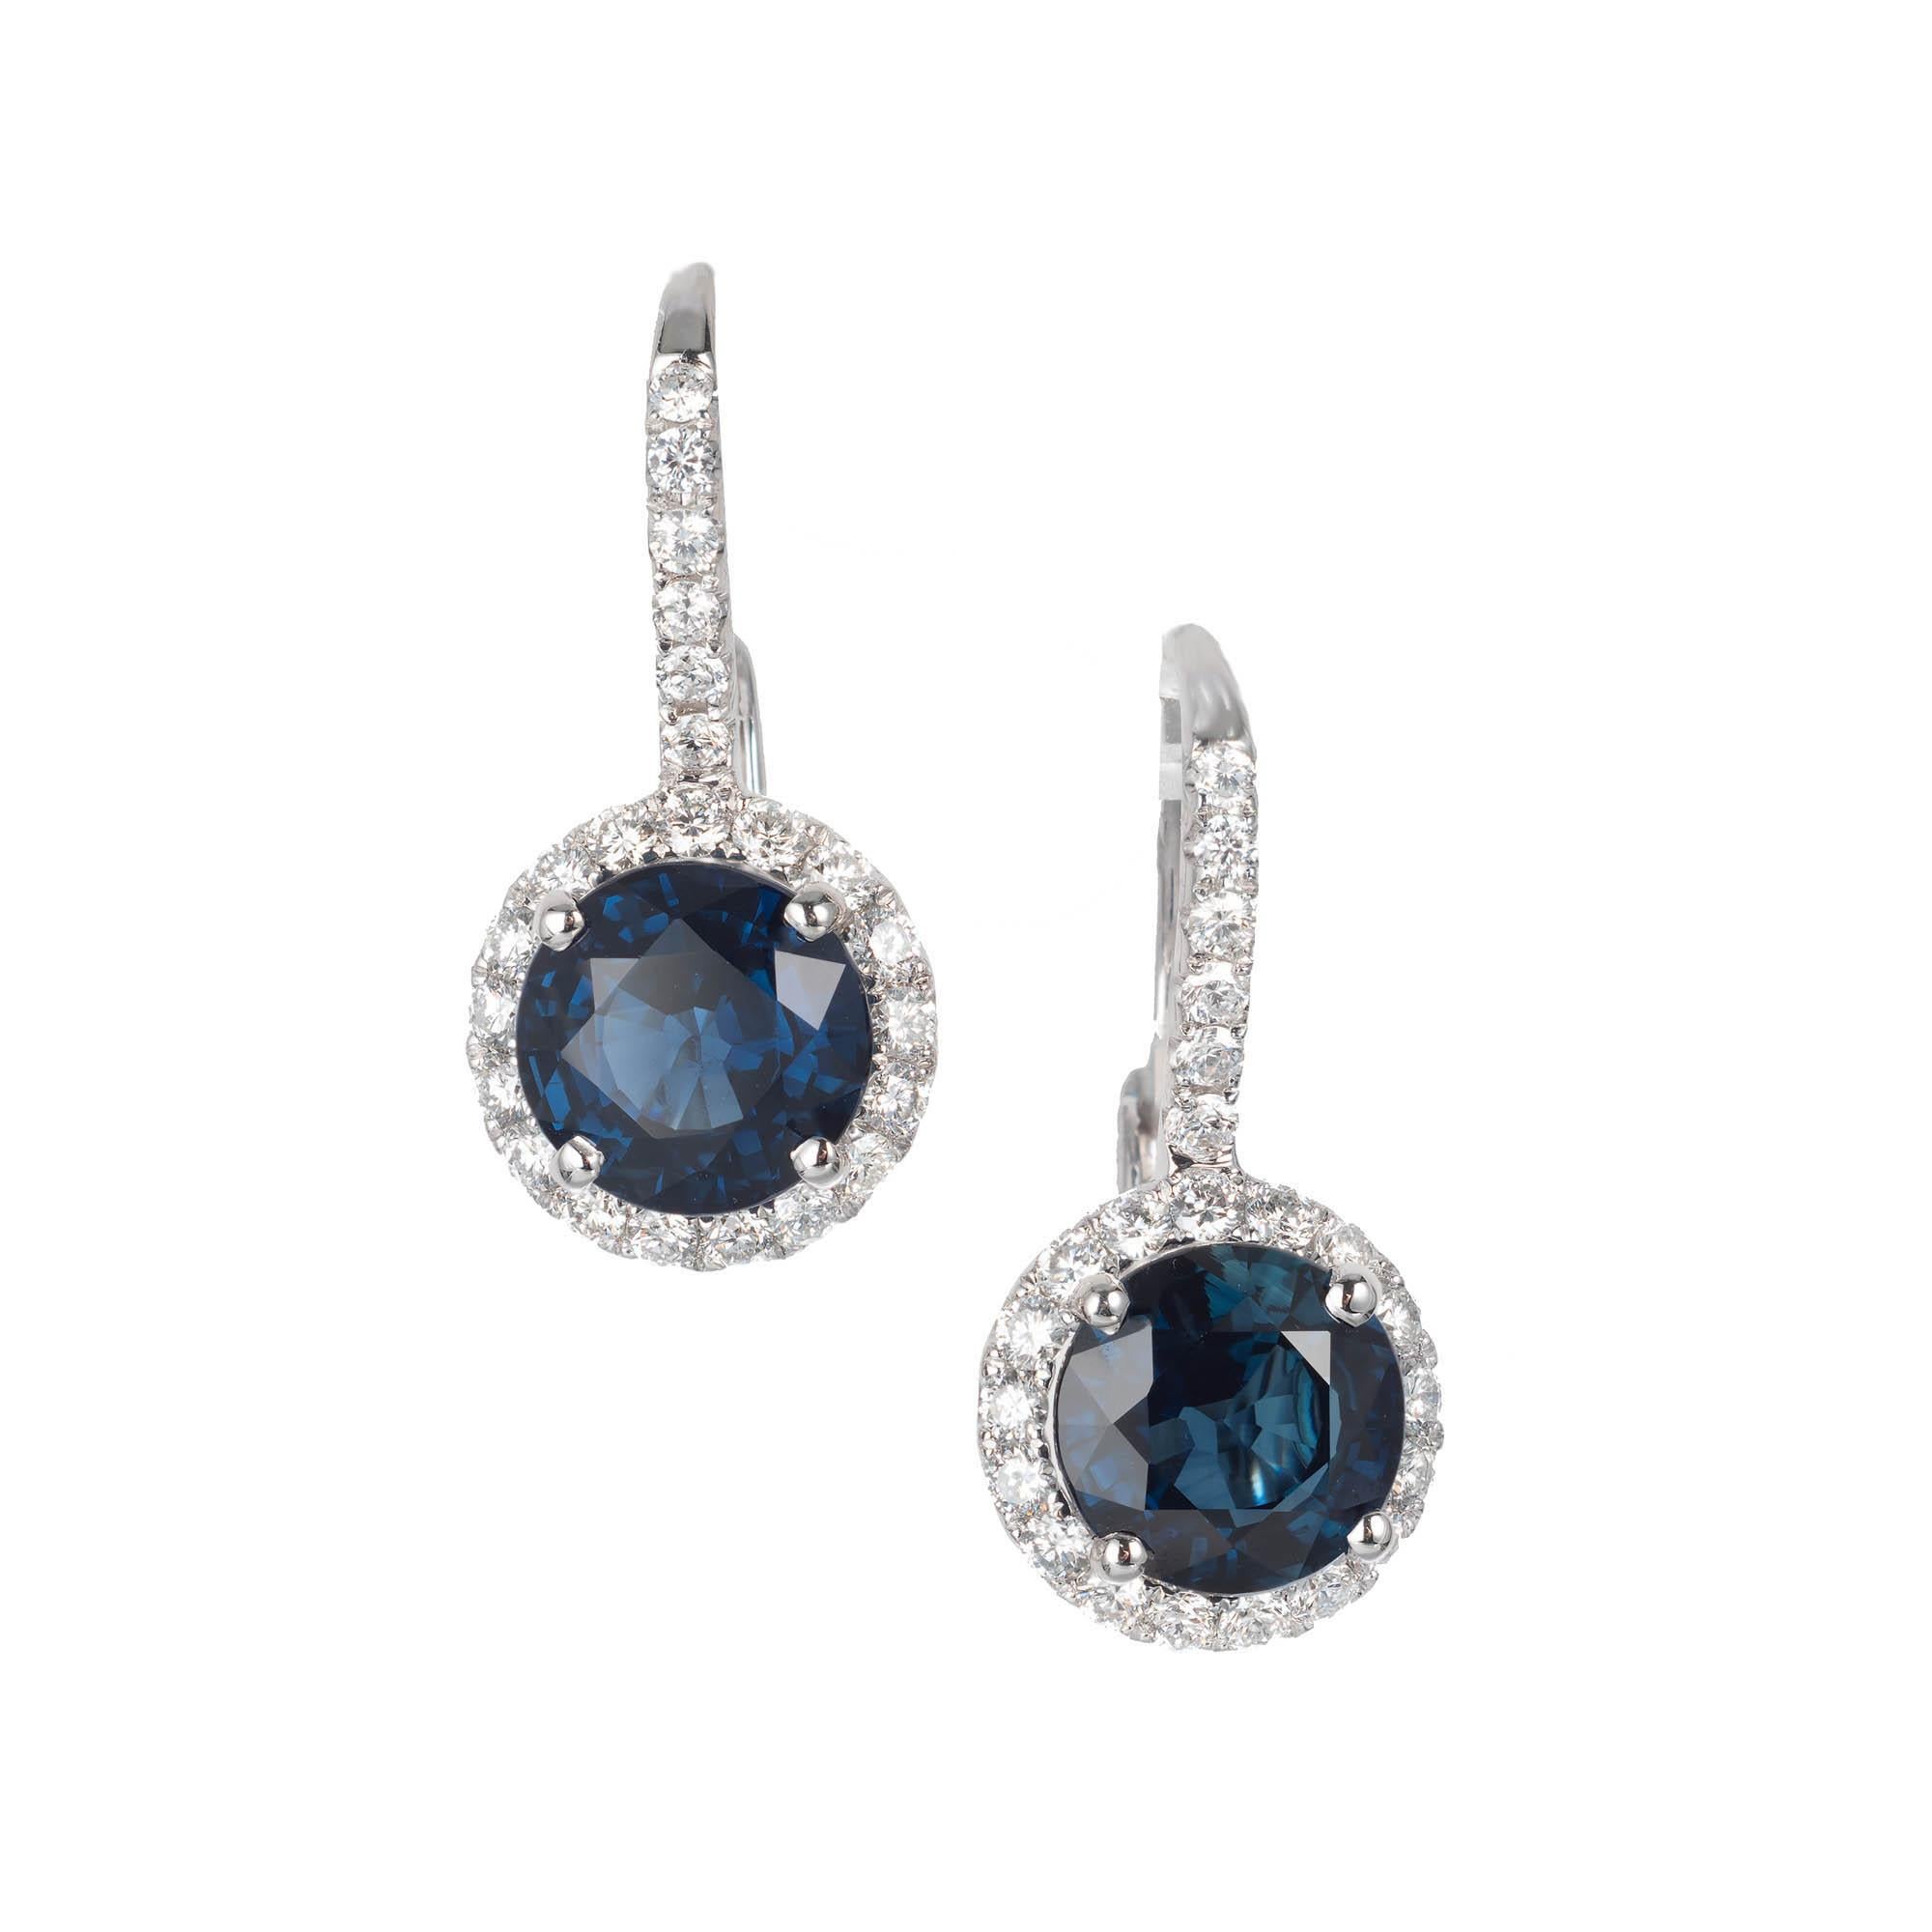 Peter Suchy 3.59 Carat Natural Sapphire Diamond Dangle Earrings